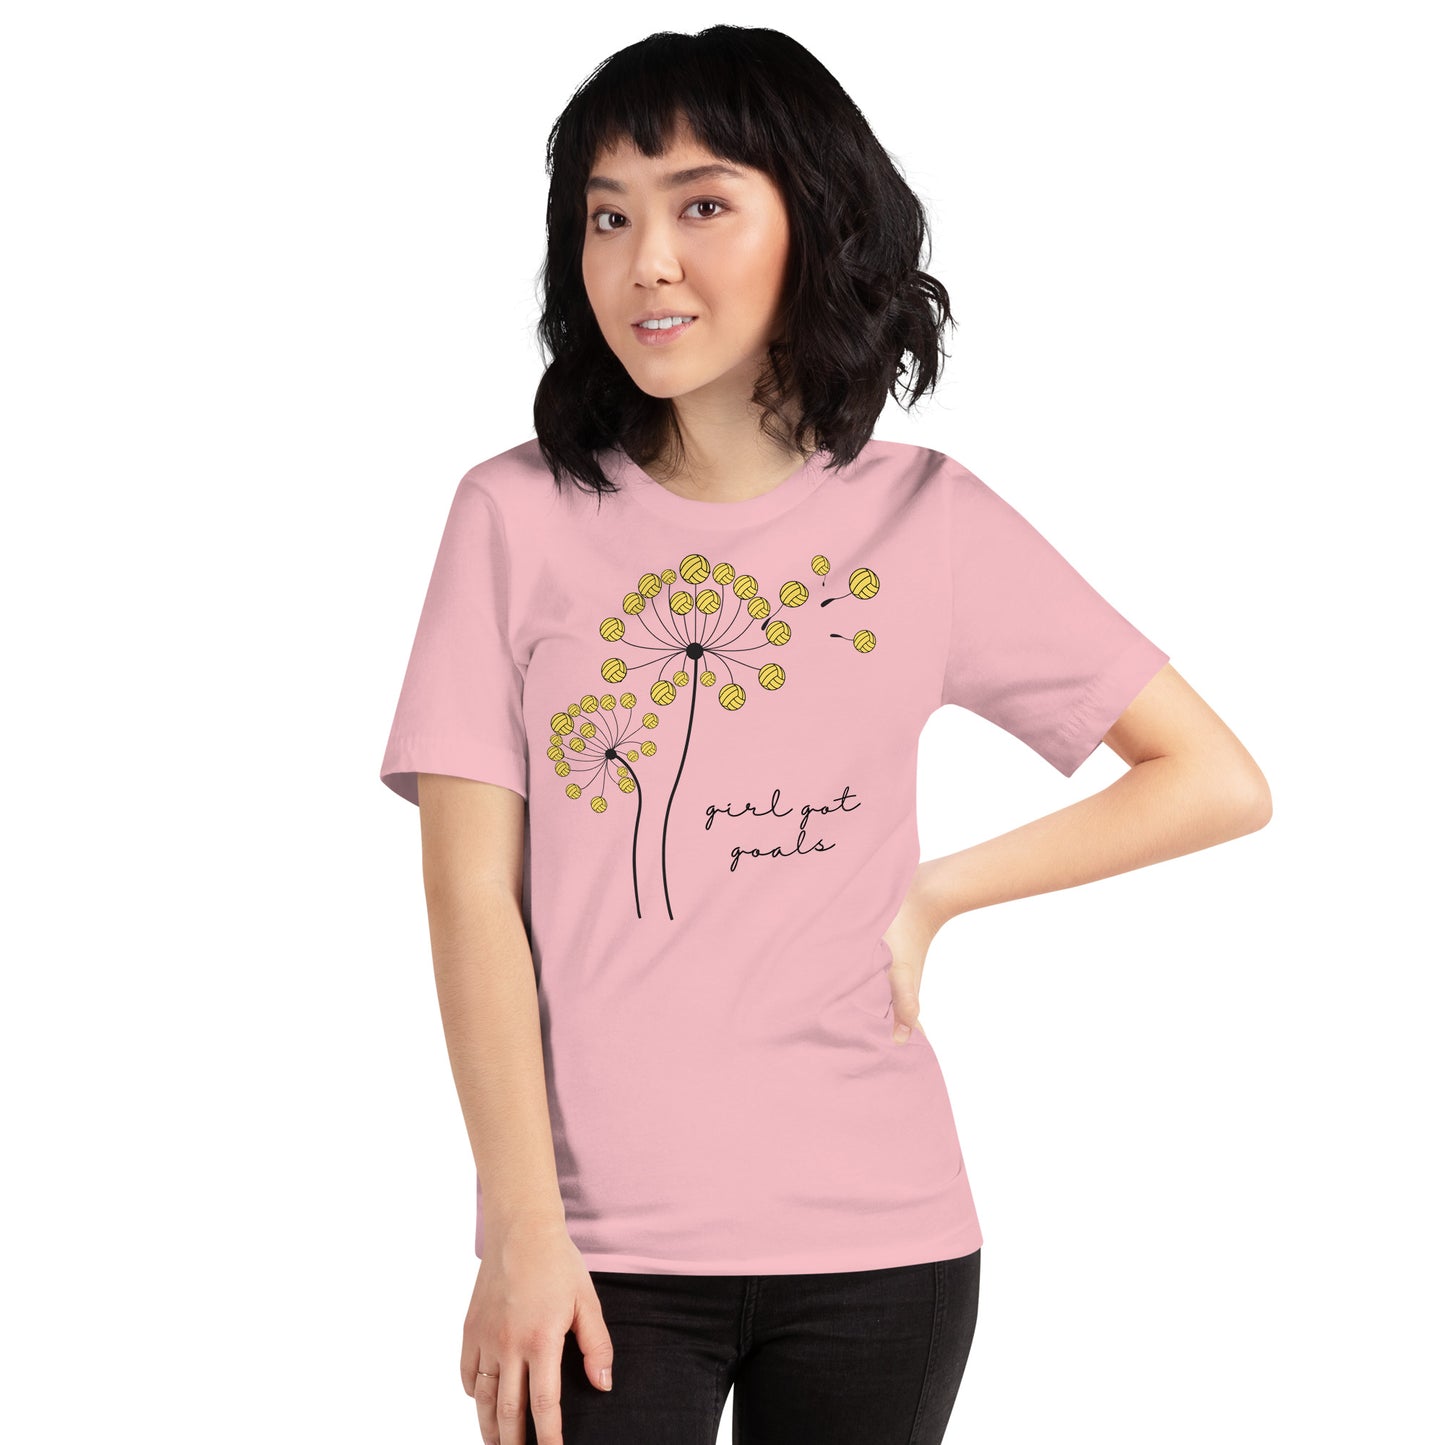 Dandelion Girl Got Goals - Unisex Soft T-shirt - Bella Canvas 3001